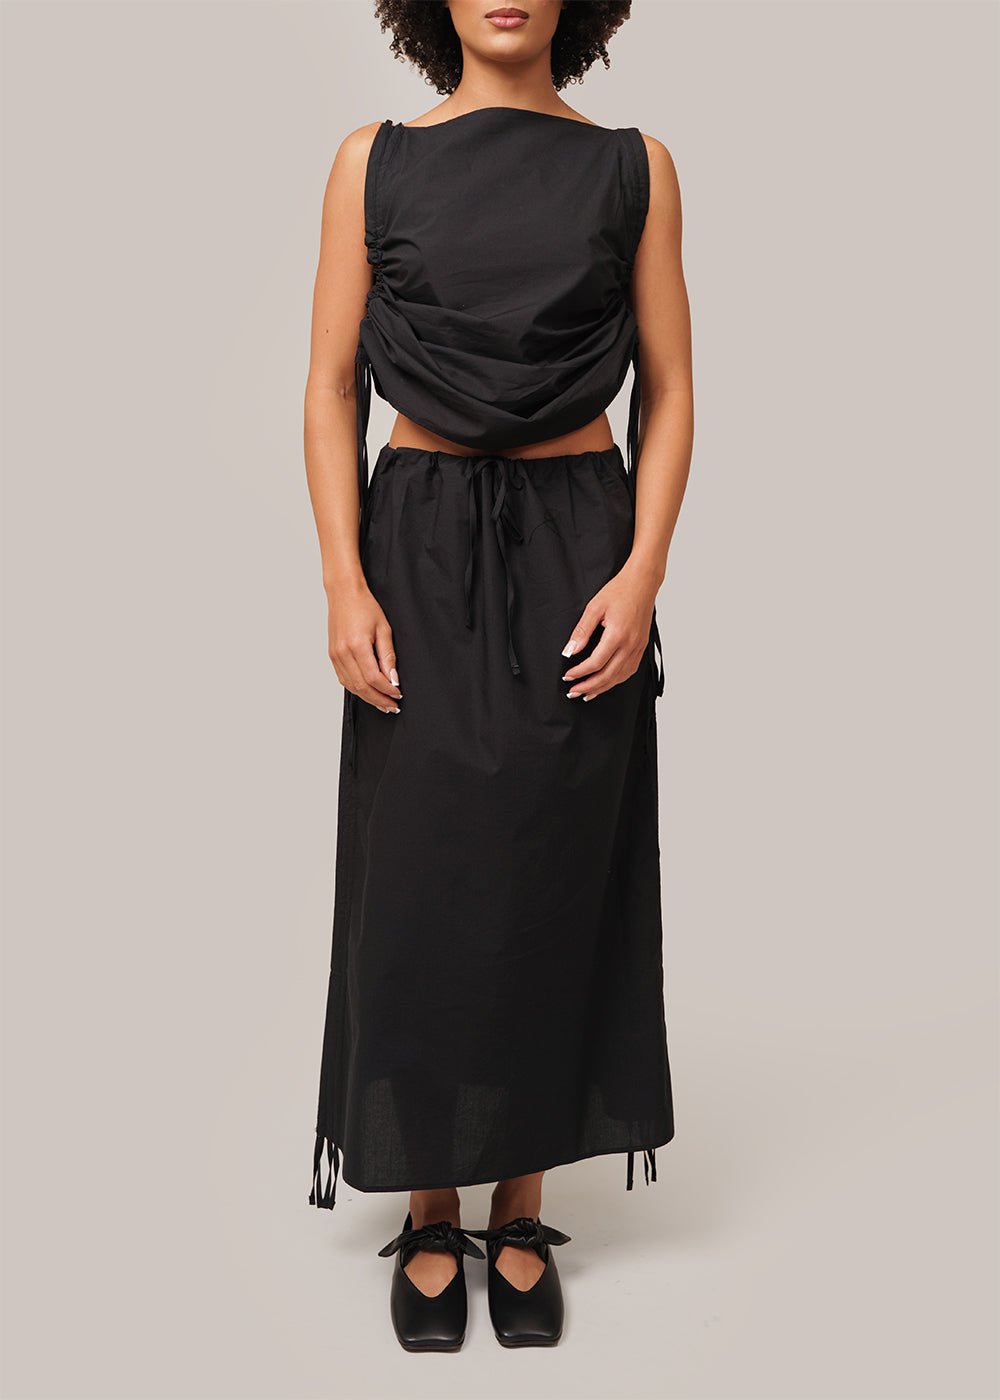 Baserange Black Pictorial Strap Skirt - New Classics Studios Sustainable Ethical Fashion Canada